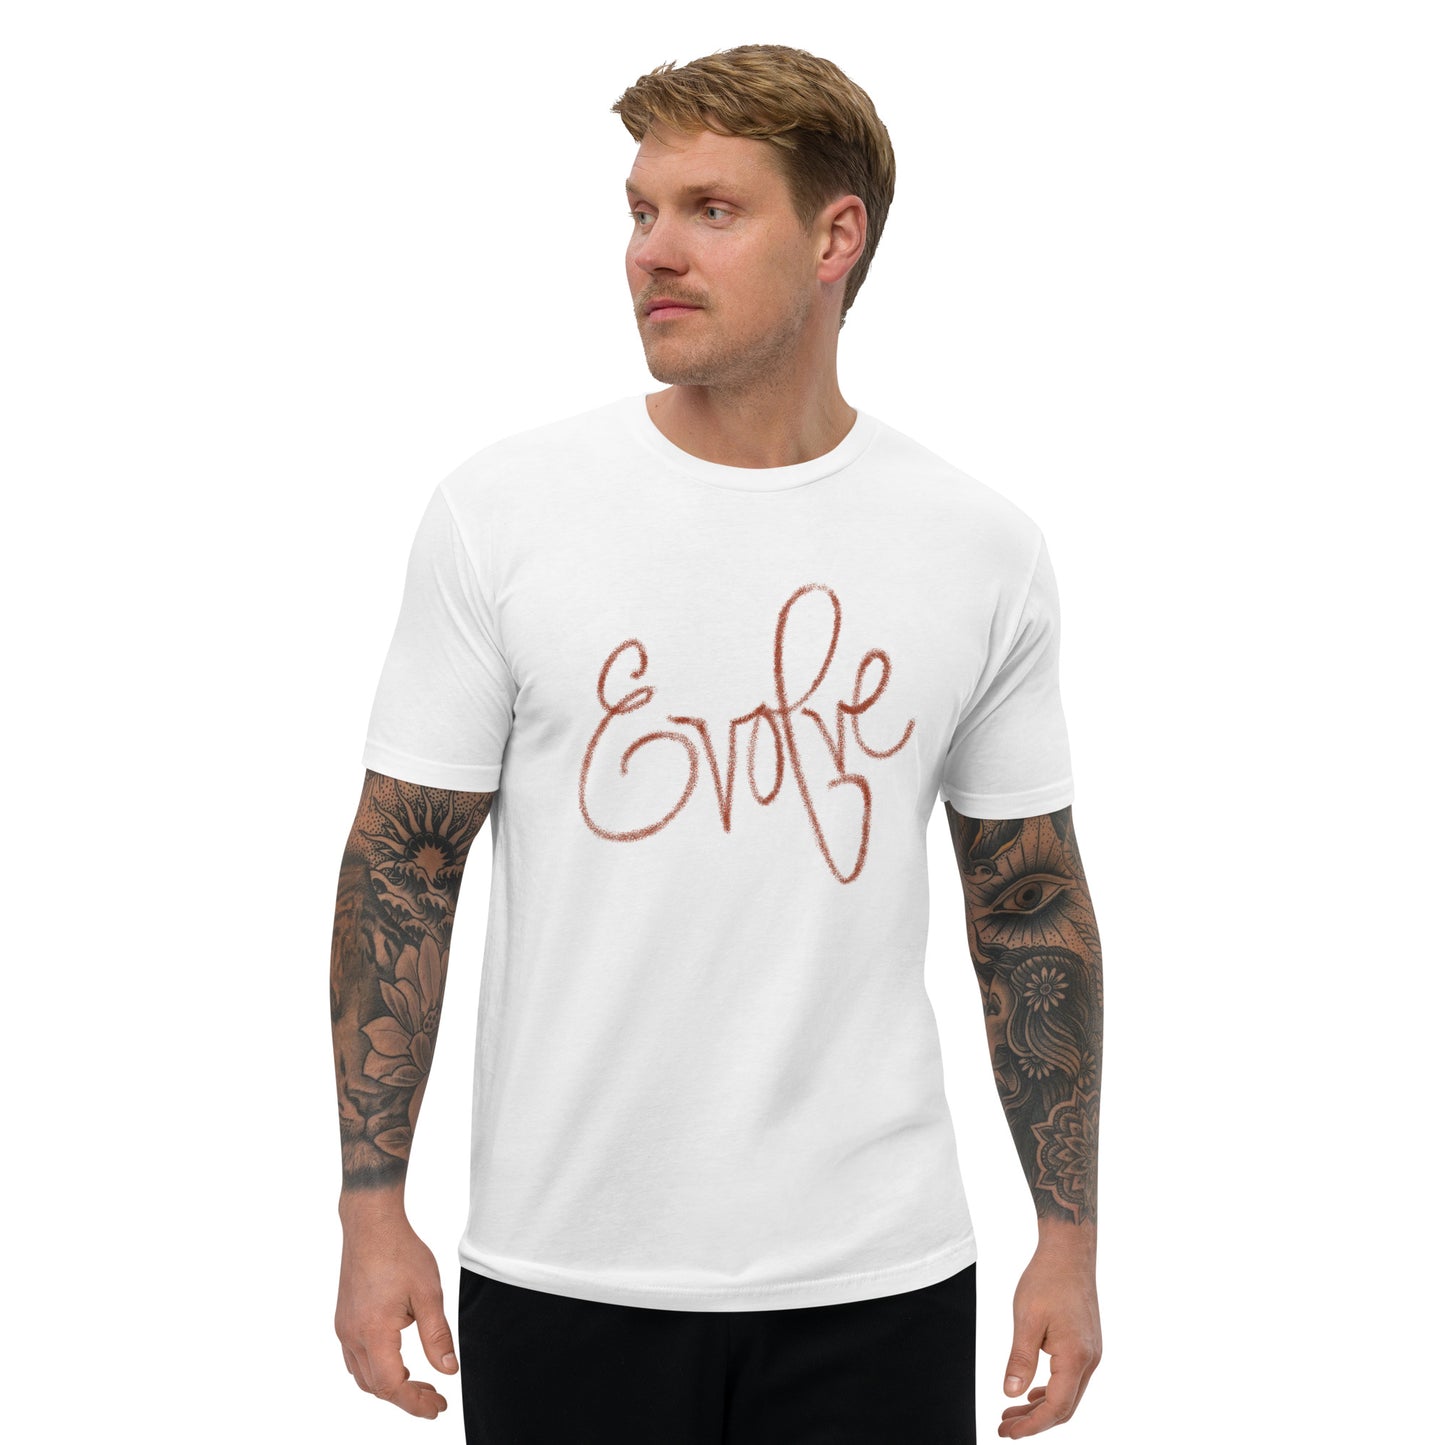 "Evolve" Short Sleeve Men's Fitted T-shirt